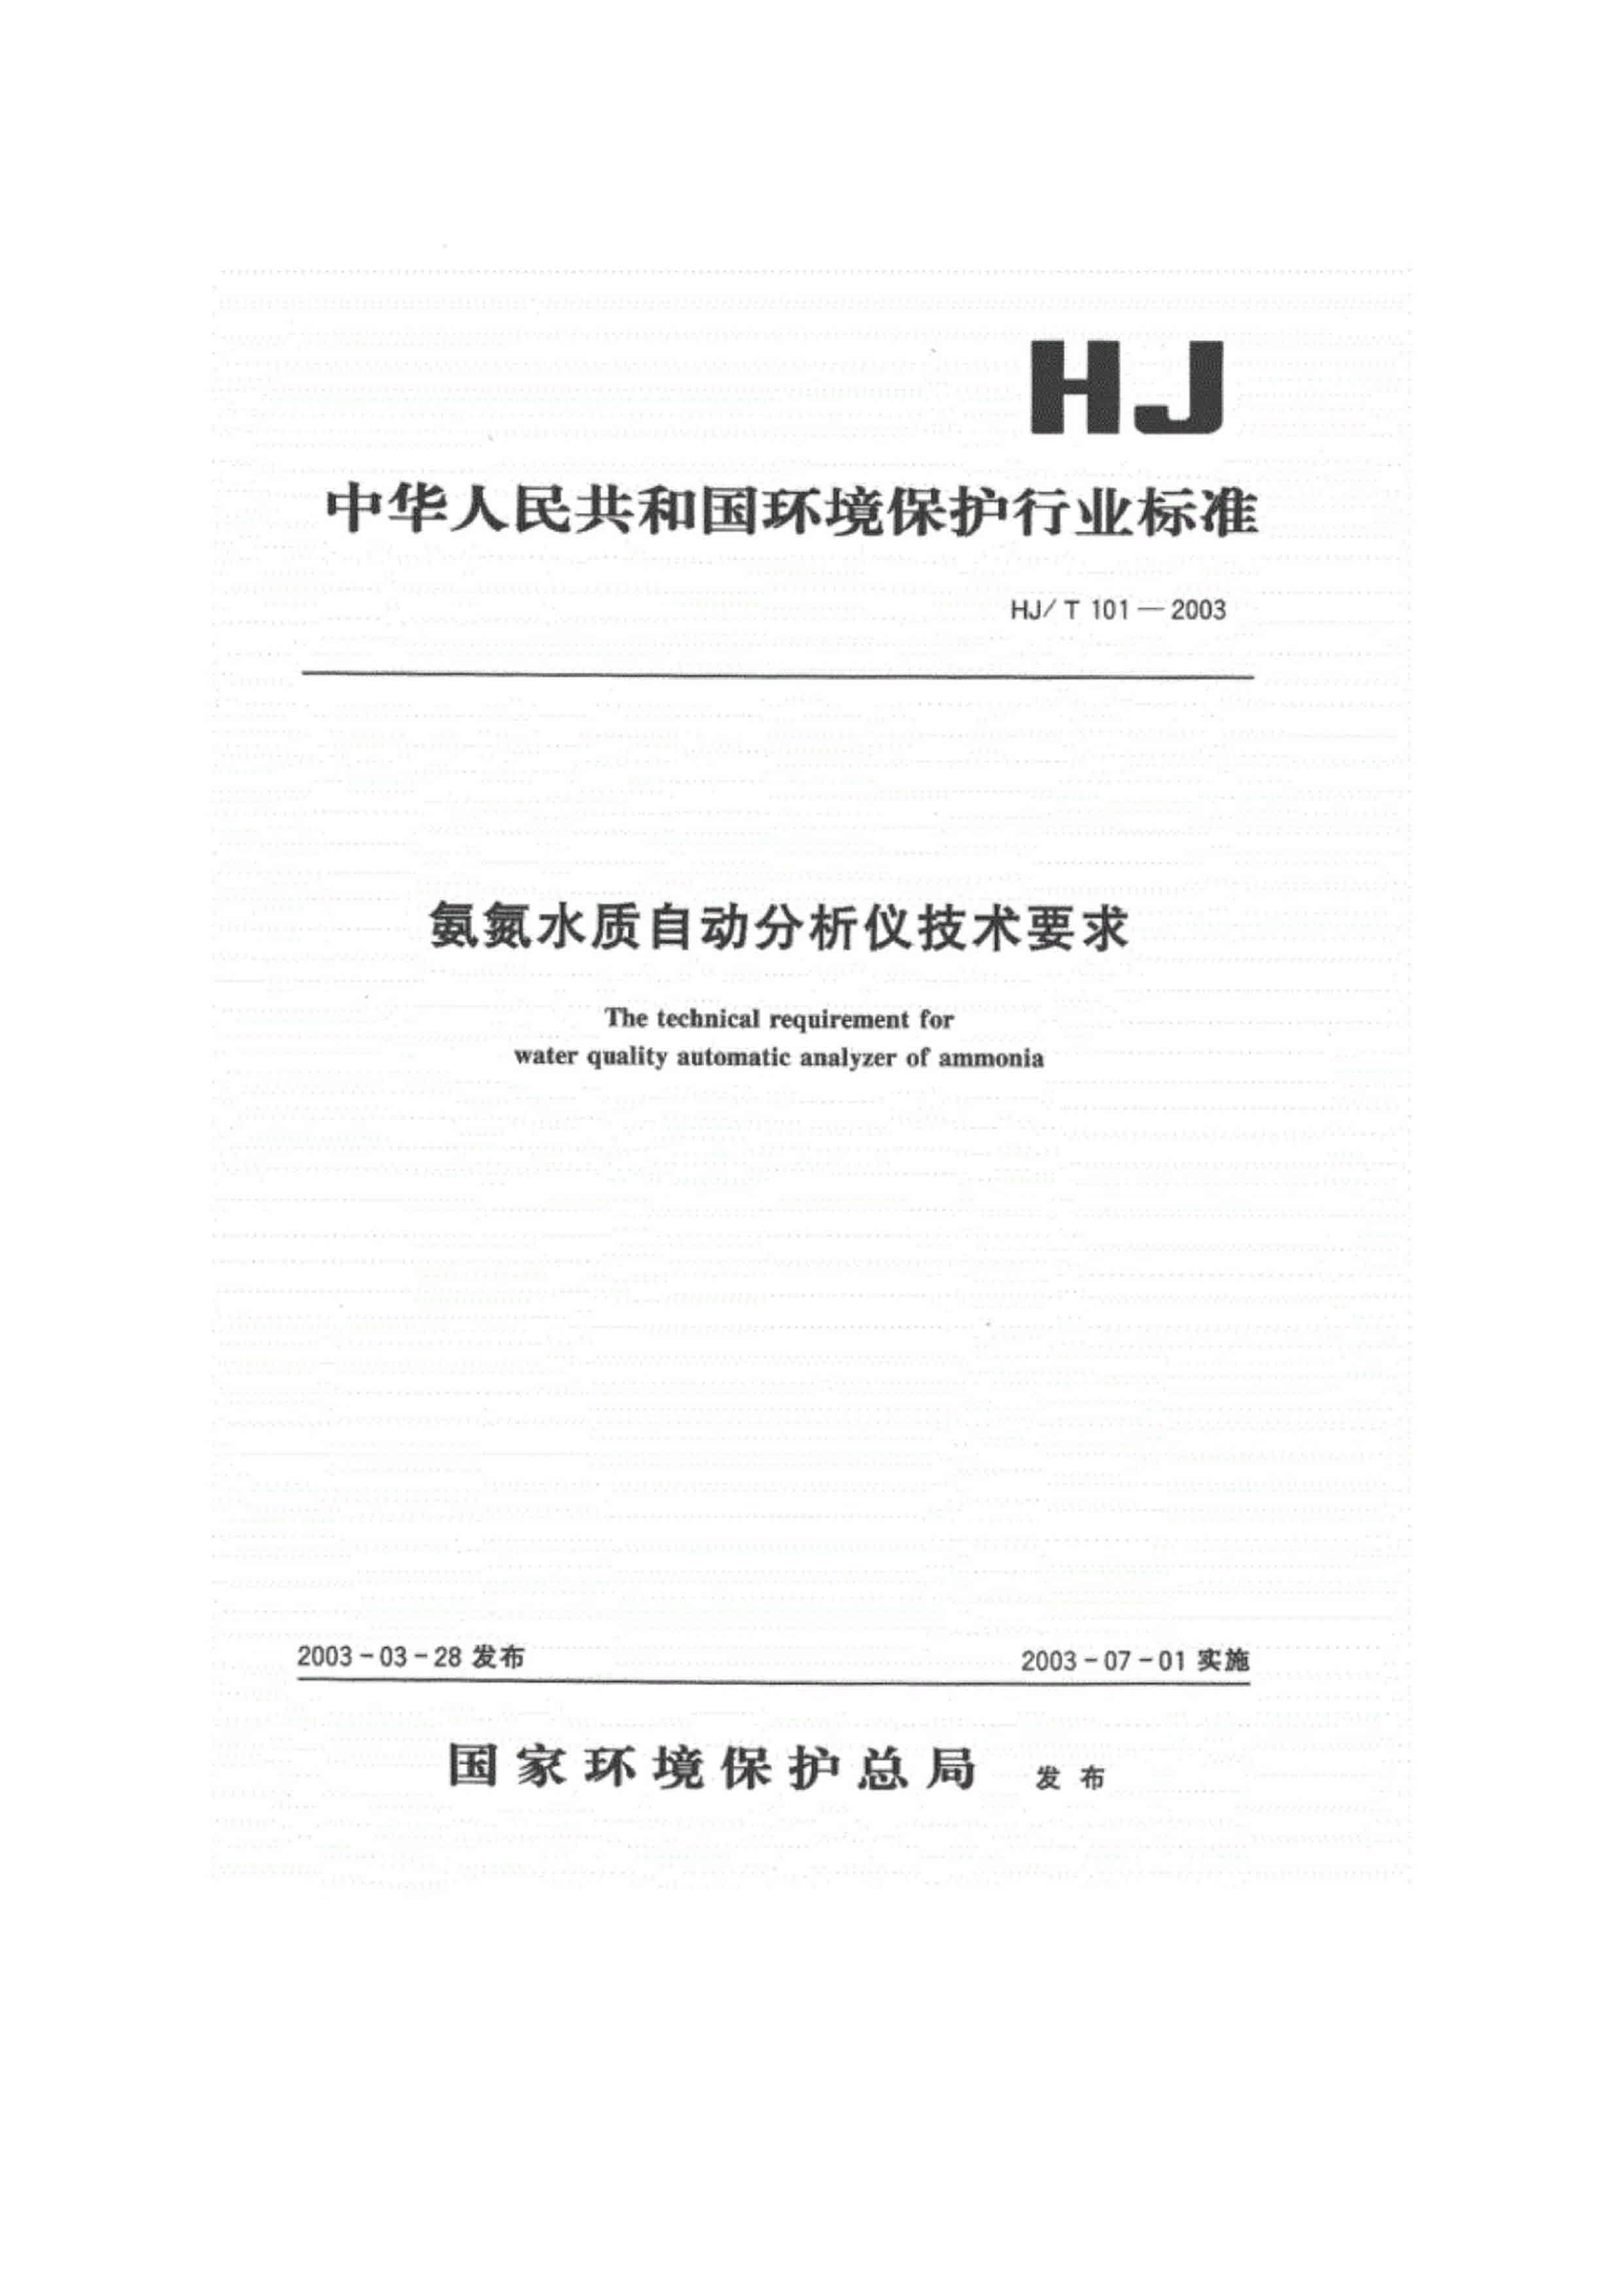 HJ-T101-2003 环境保护产品技术要求 氨氮水质自动分析仪技术要求 下载